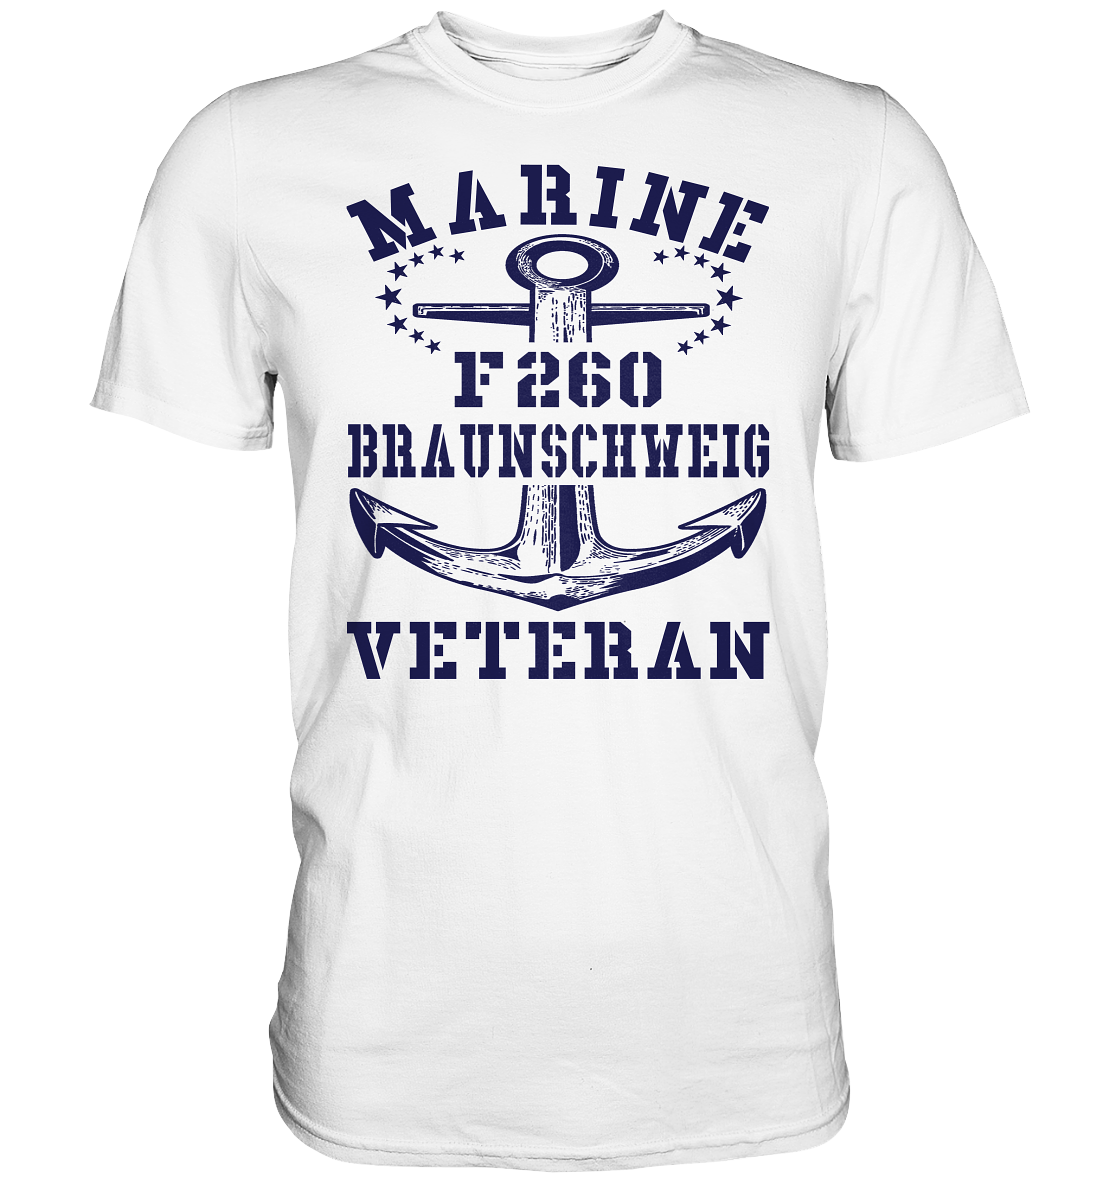 Korvette F260 BRAUNSCHWEIG Marine Veteran - Premium Shirt